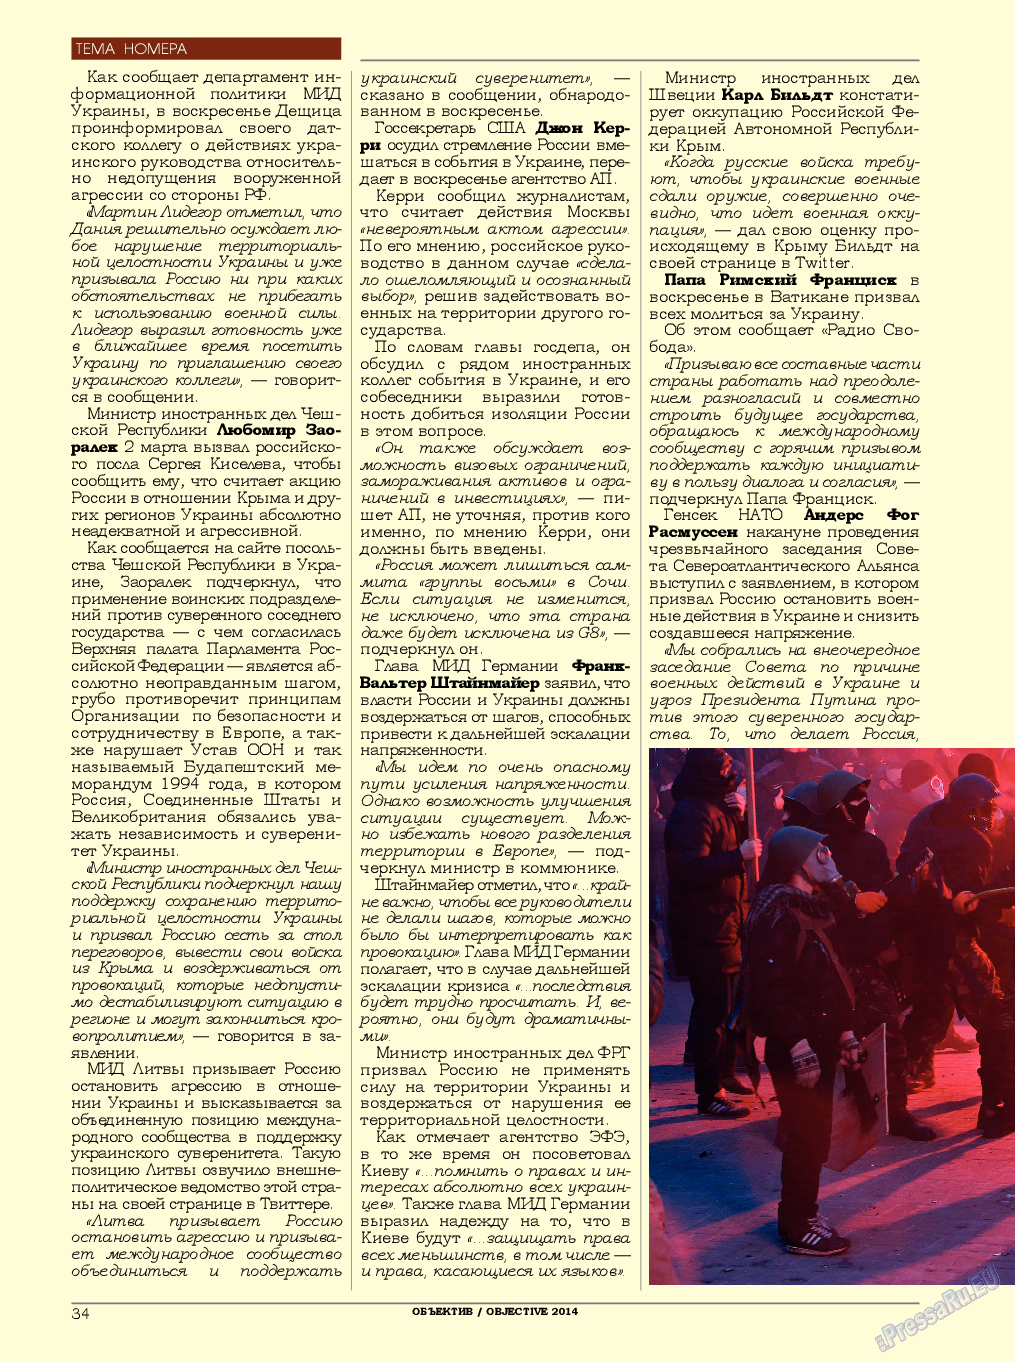 Объектив EU (журнал). 2014 год, номер 2, стр. 34